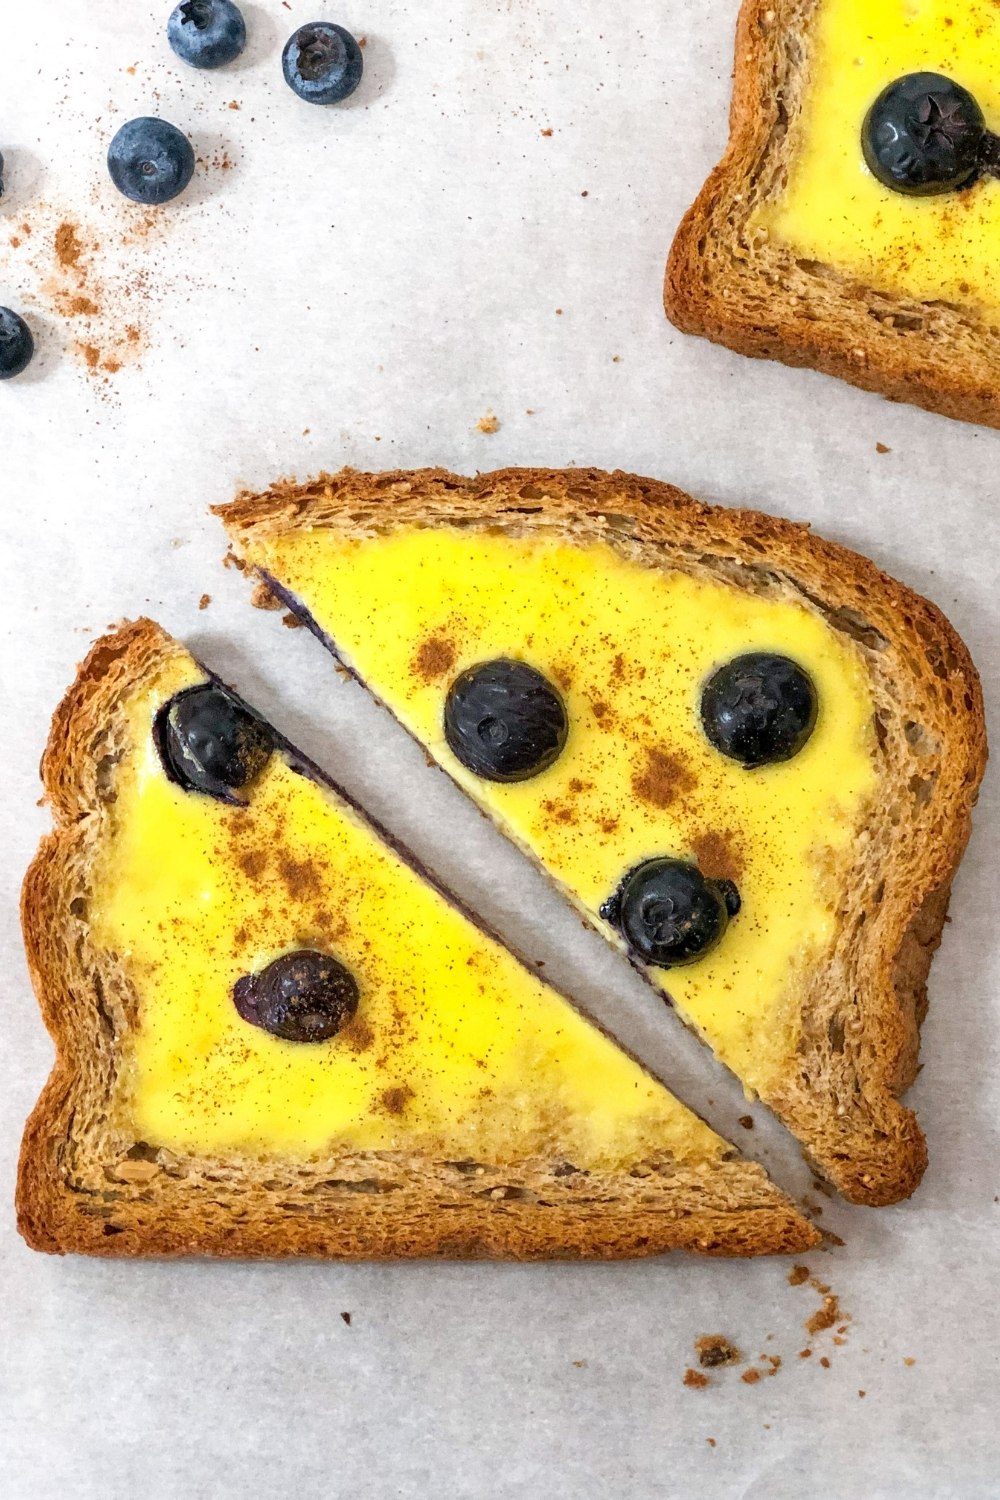 tiktok custard toast with blueberries and cinnamon